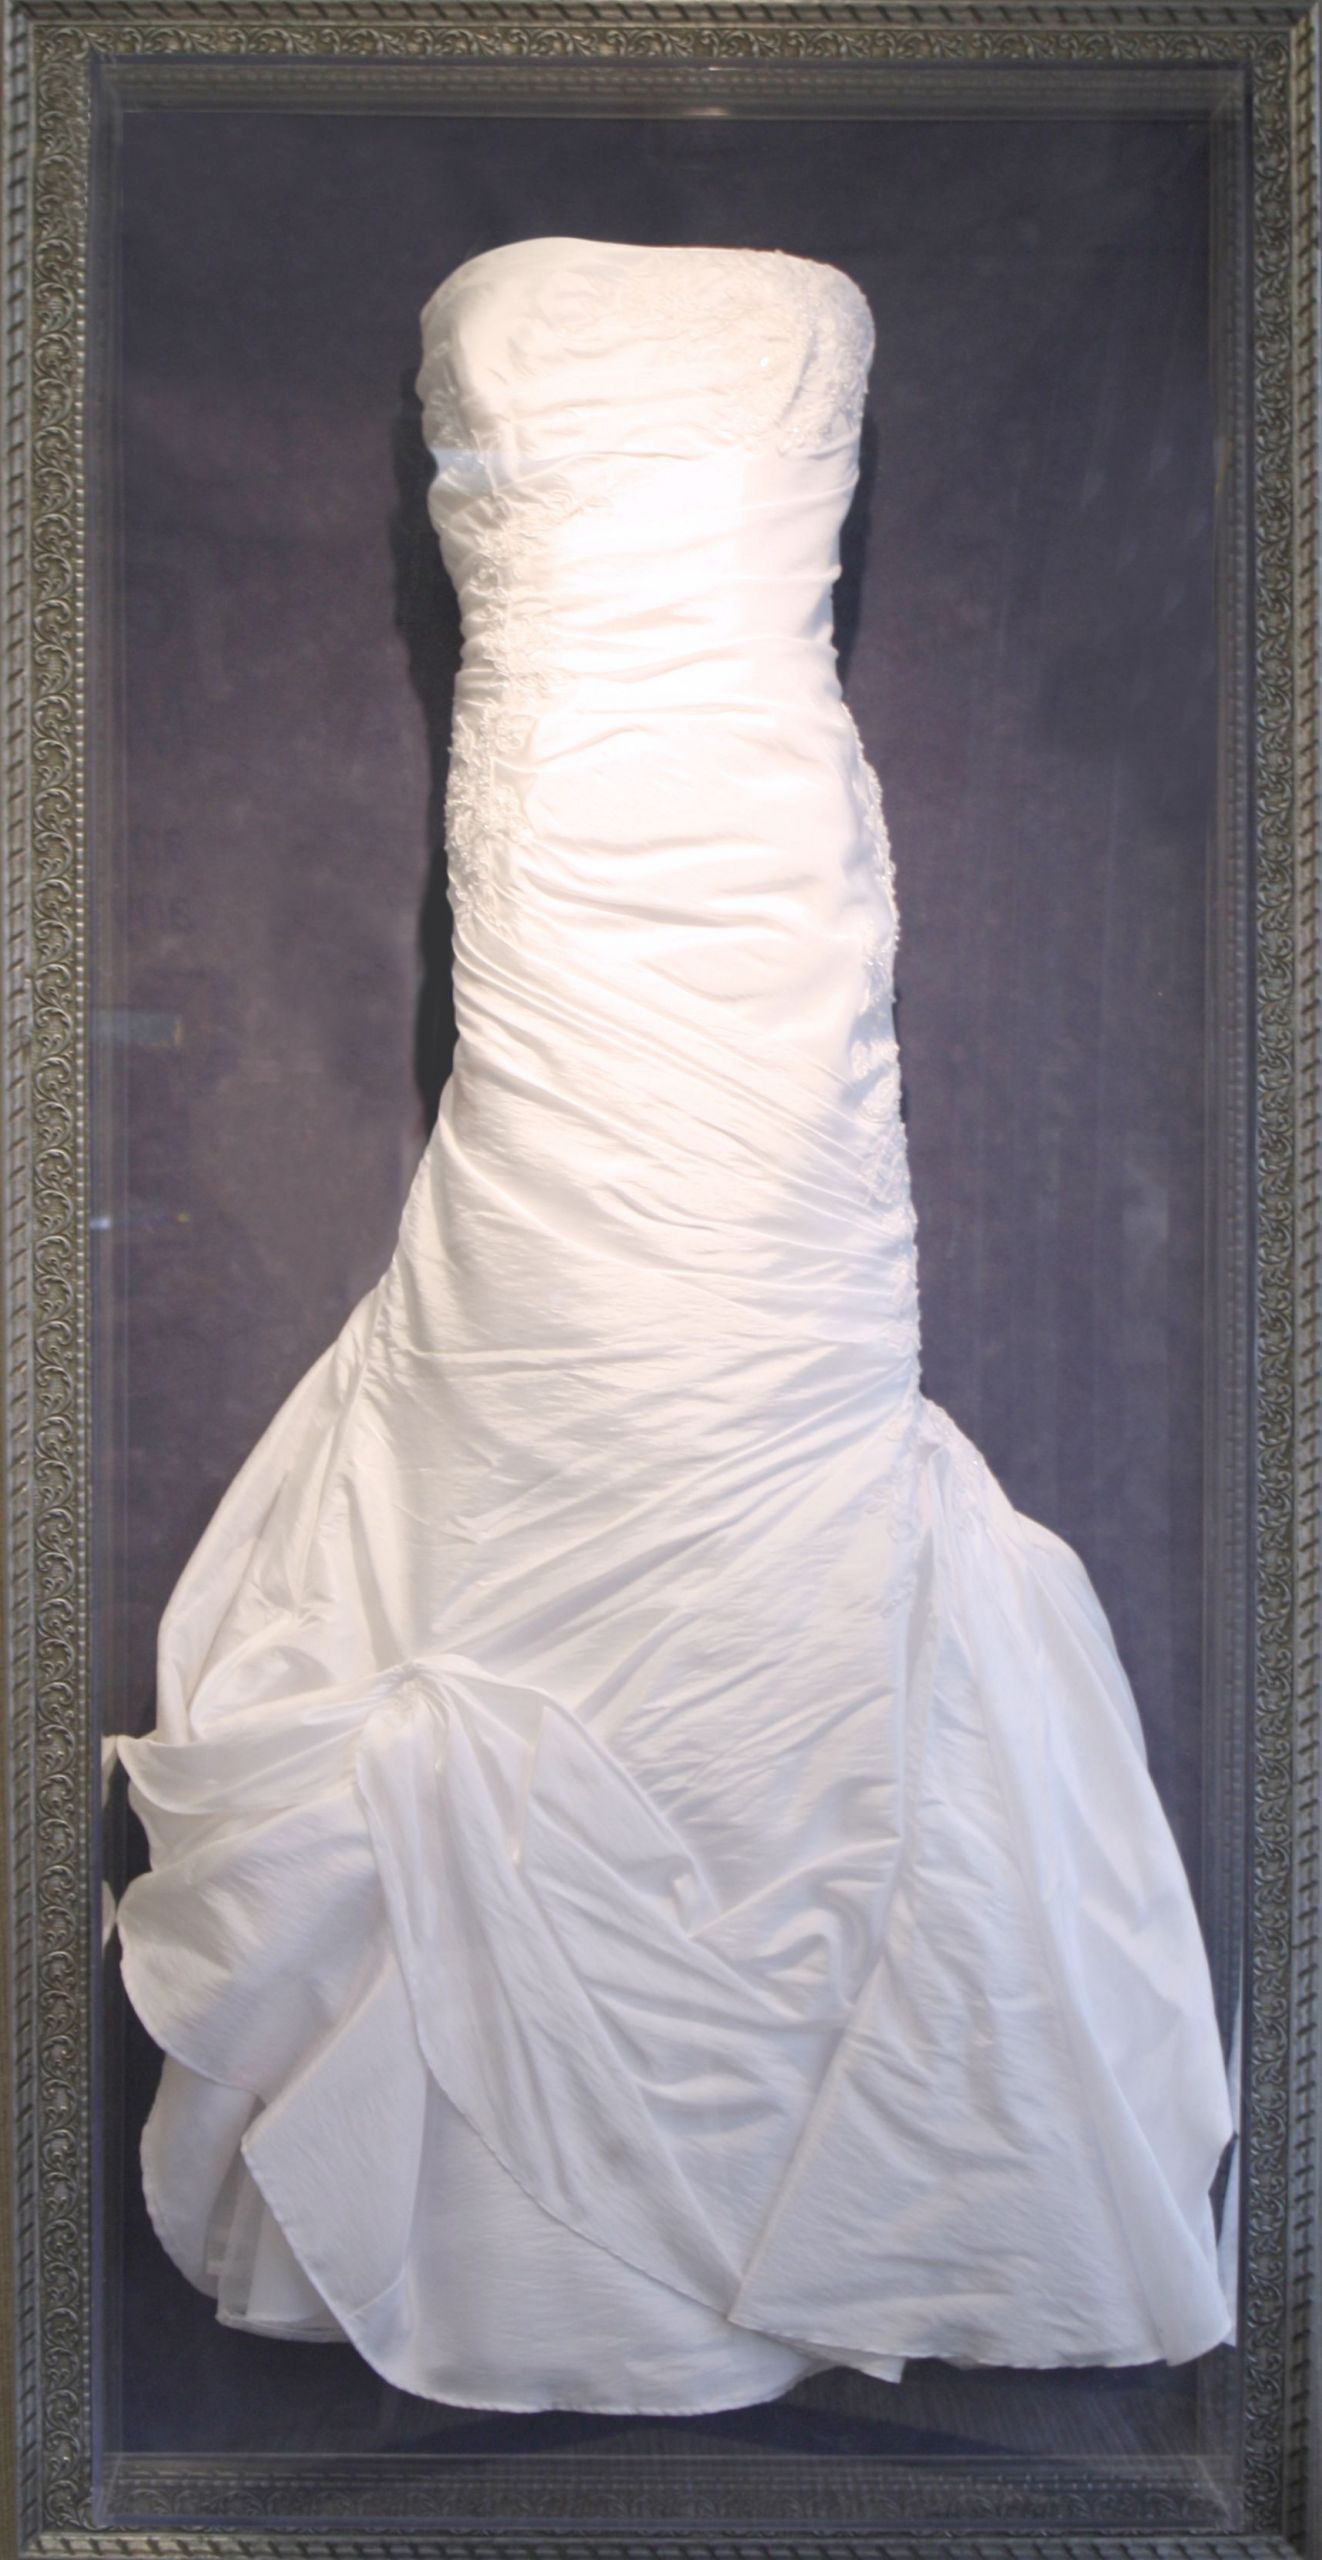 How To Preserve A Wedding Dress
 Preserve your wedding dress in a custom framed shadowbox